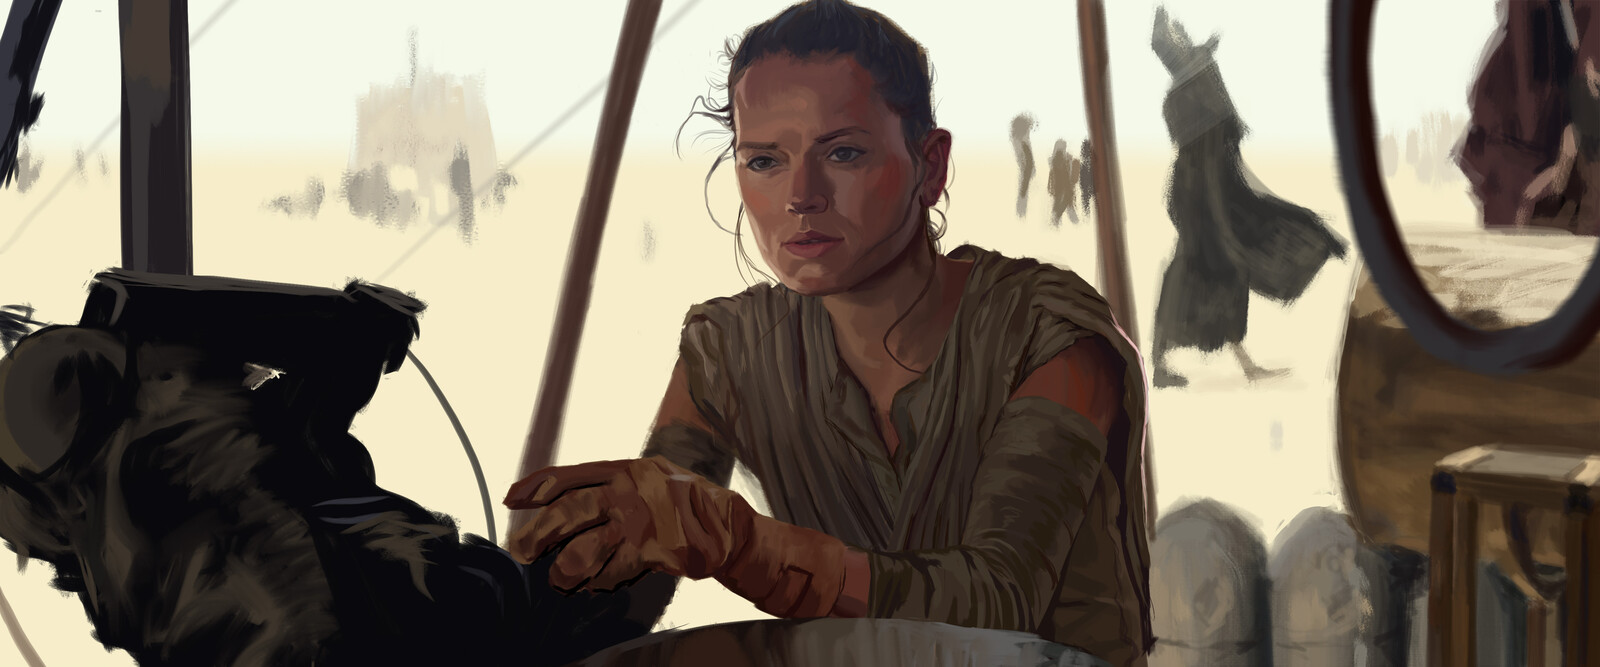 Rey - Star Wars: Episode VII The Force Awakens